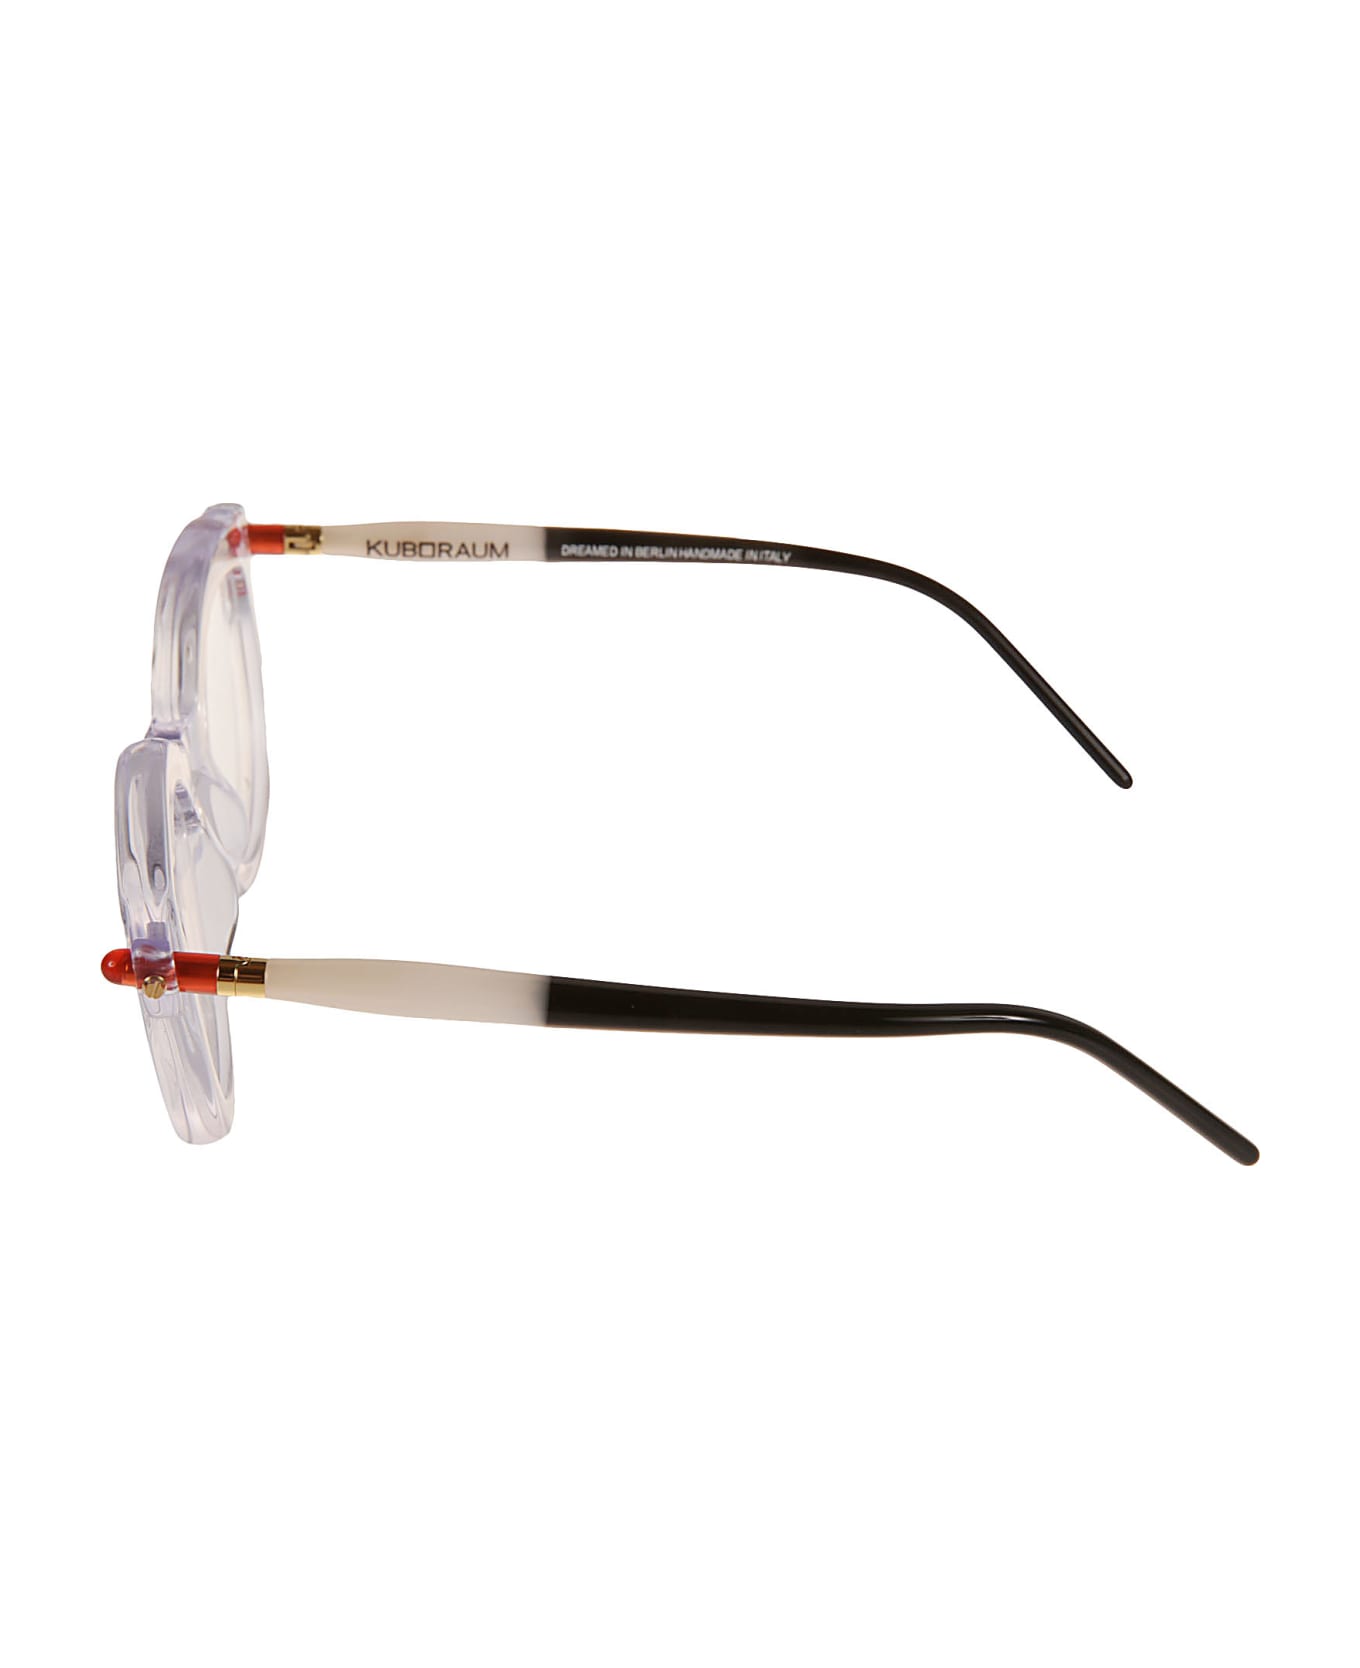 Kuboraum P7 Glasses - N/A